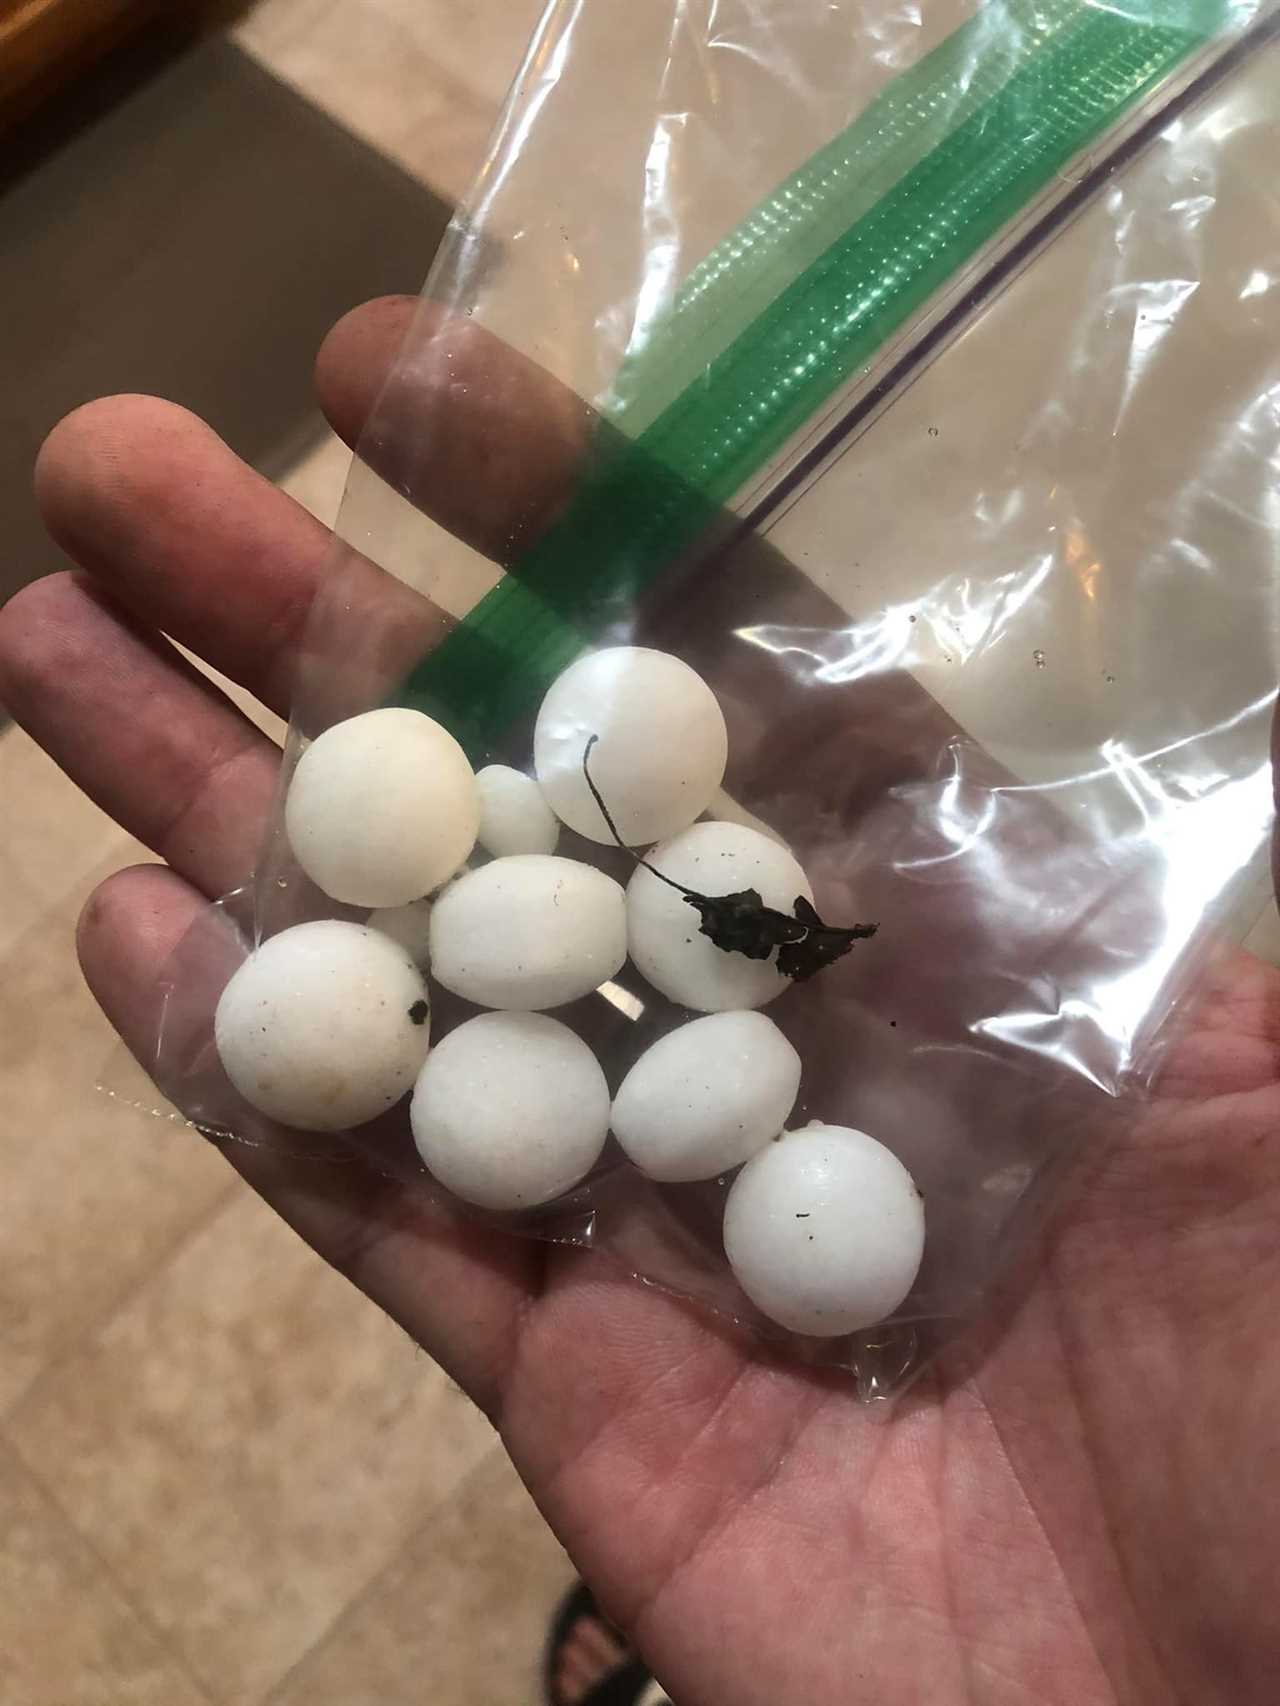 Do moth balls keep frogs away